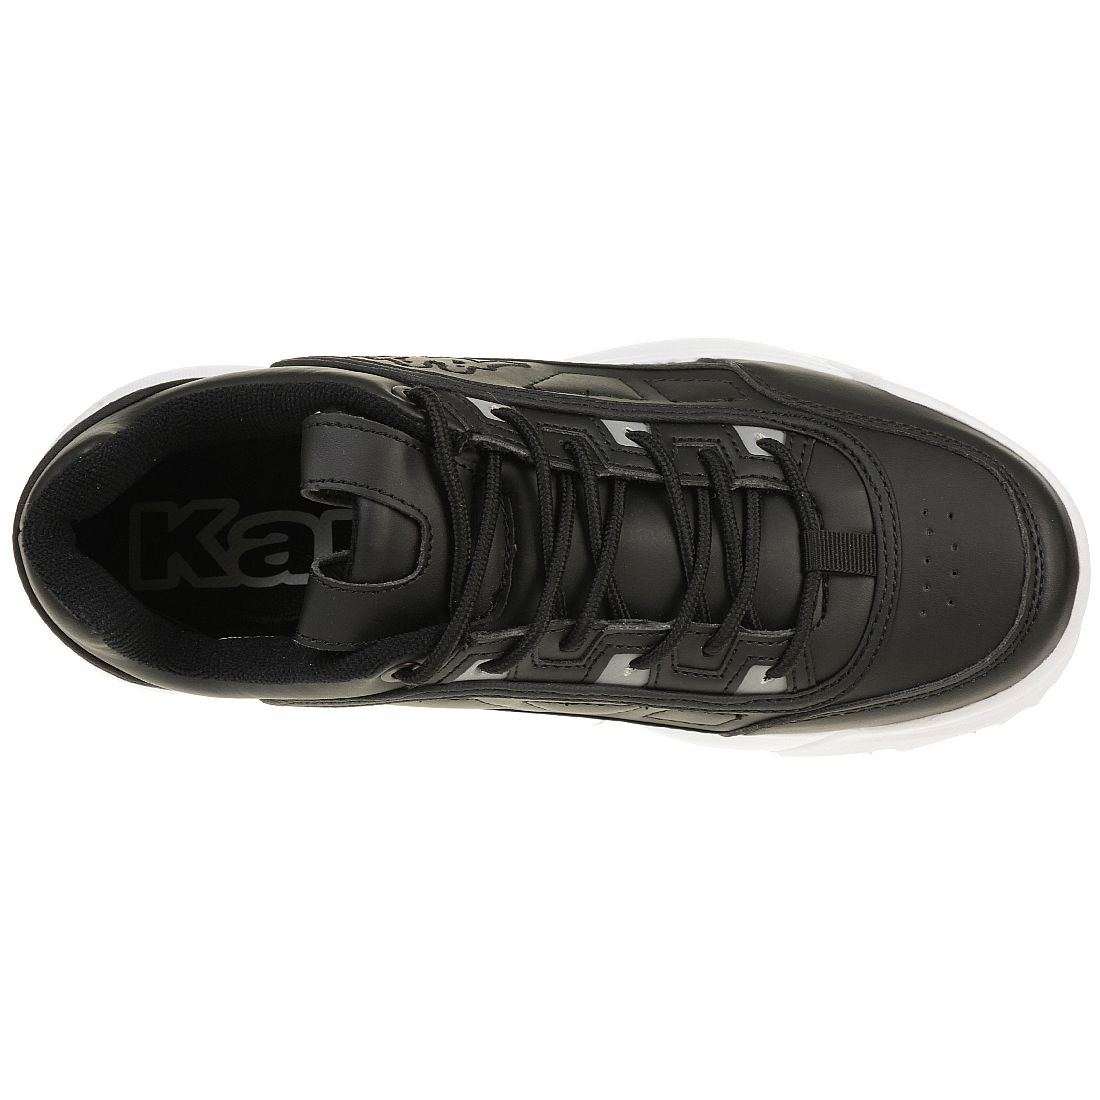 Kappa 242681 Sneaker Damen Turnschuhe Schuhe schwarz